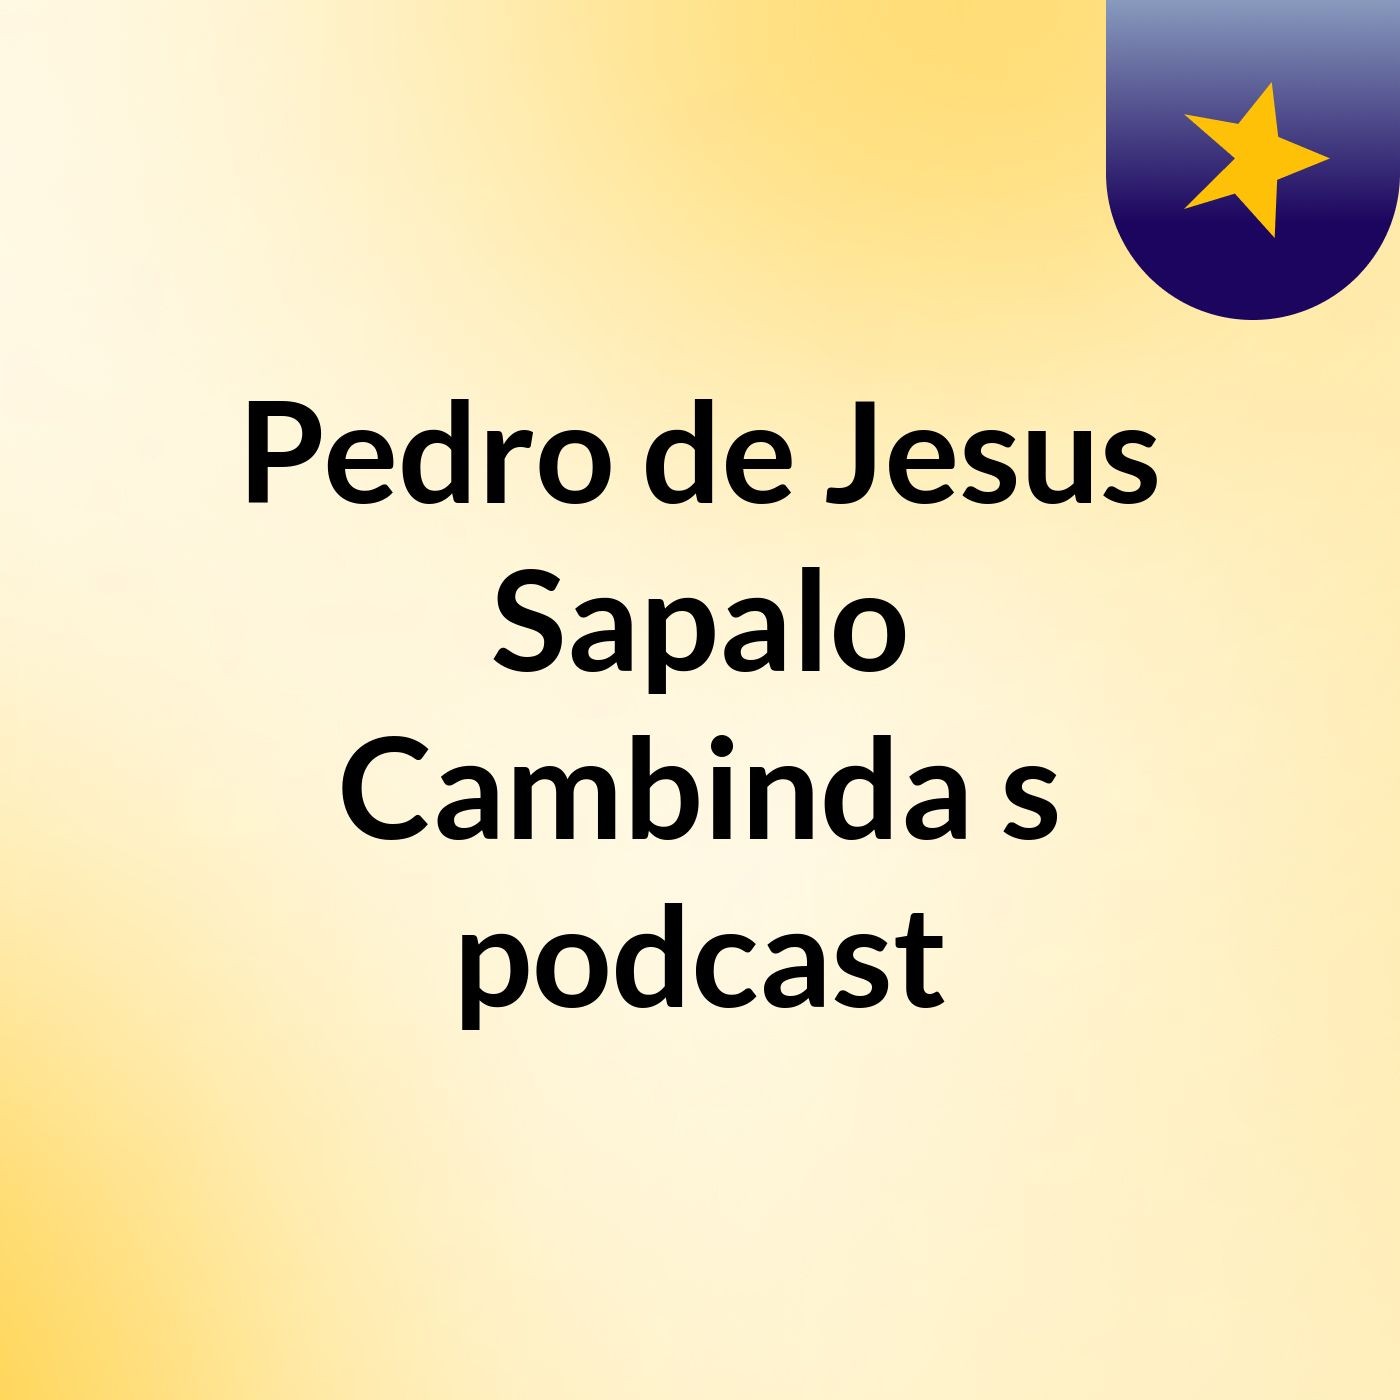 Pedro de Jesus Sapalo Cambinda's podcast